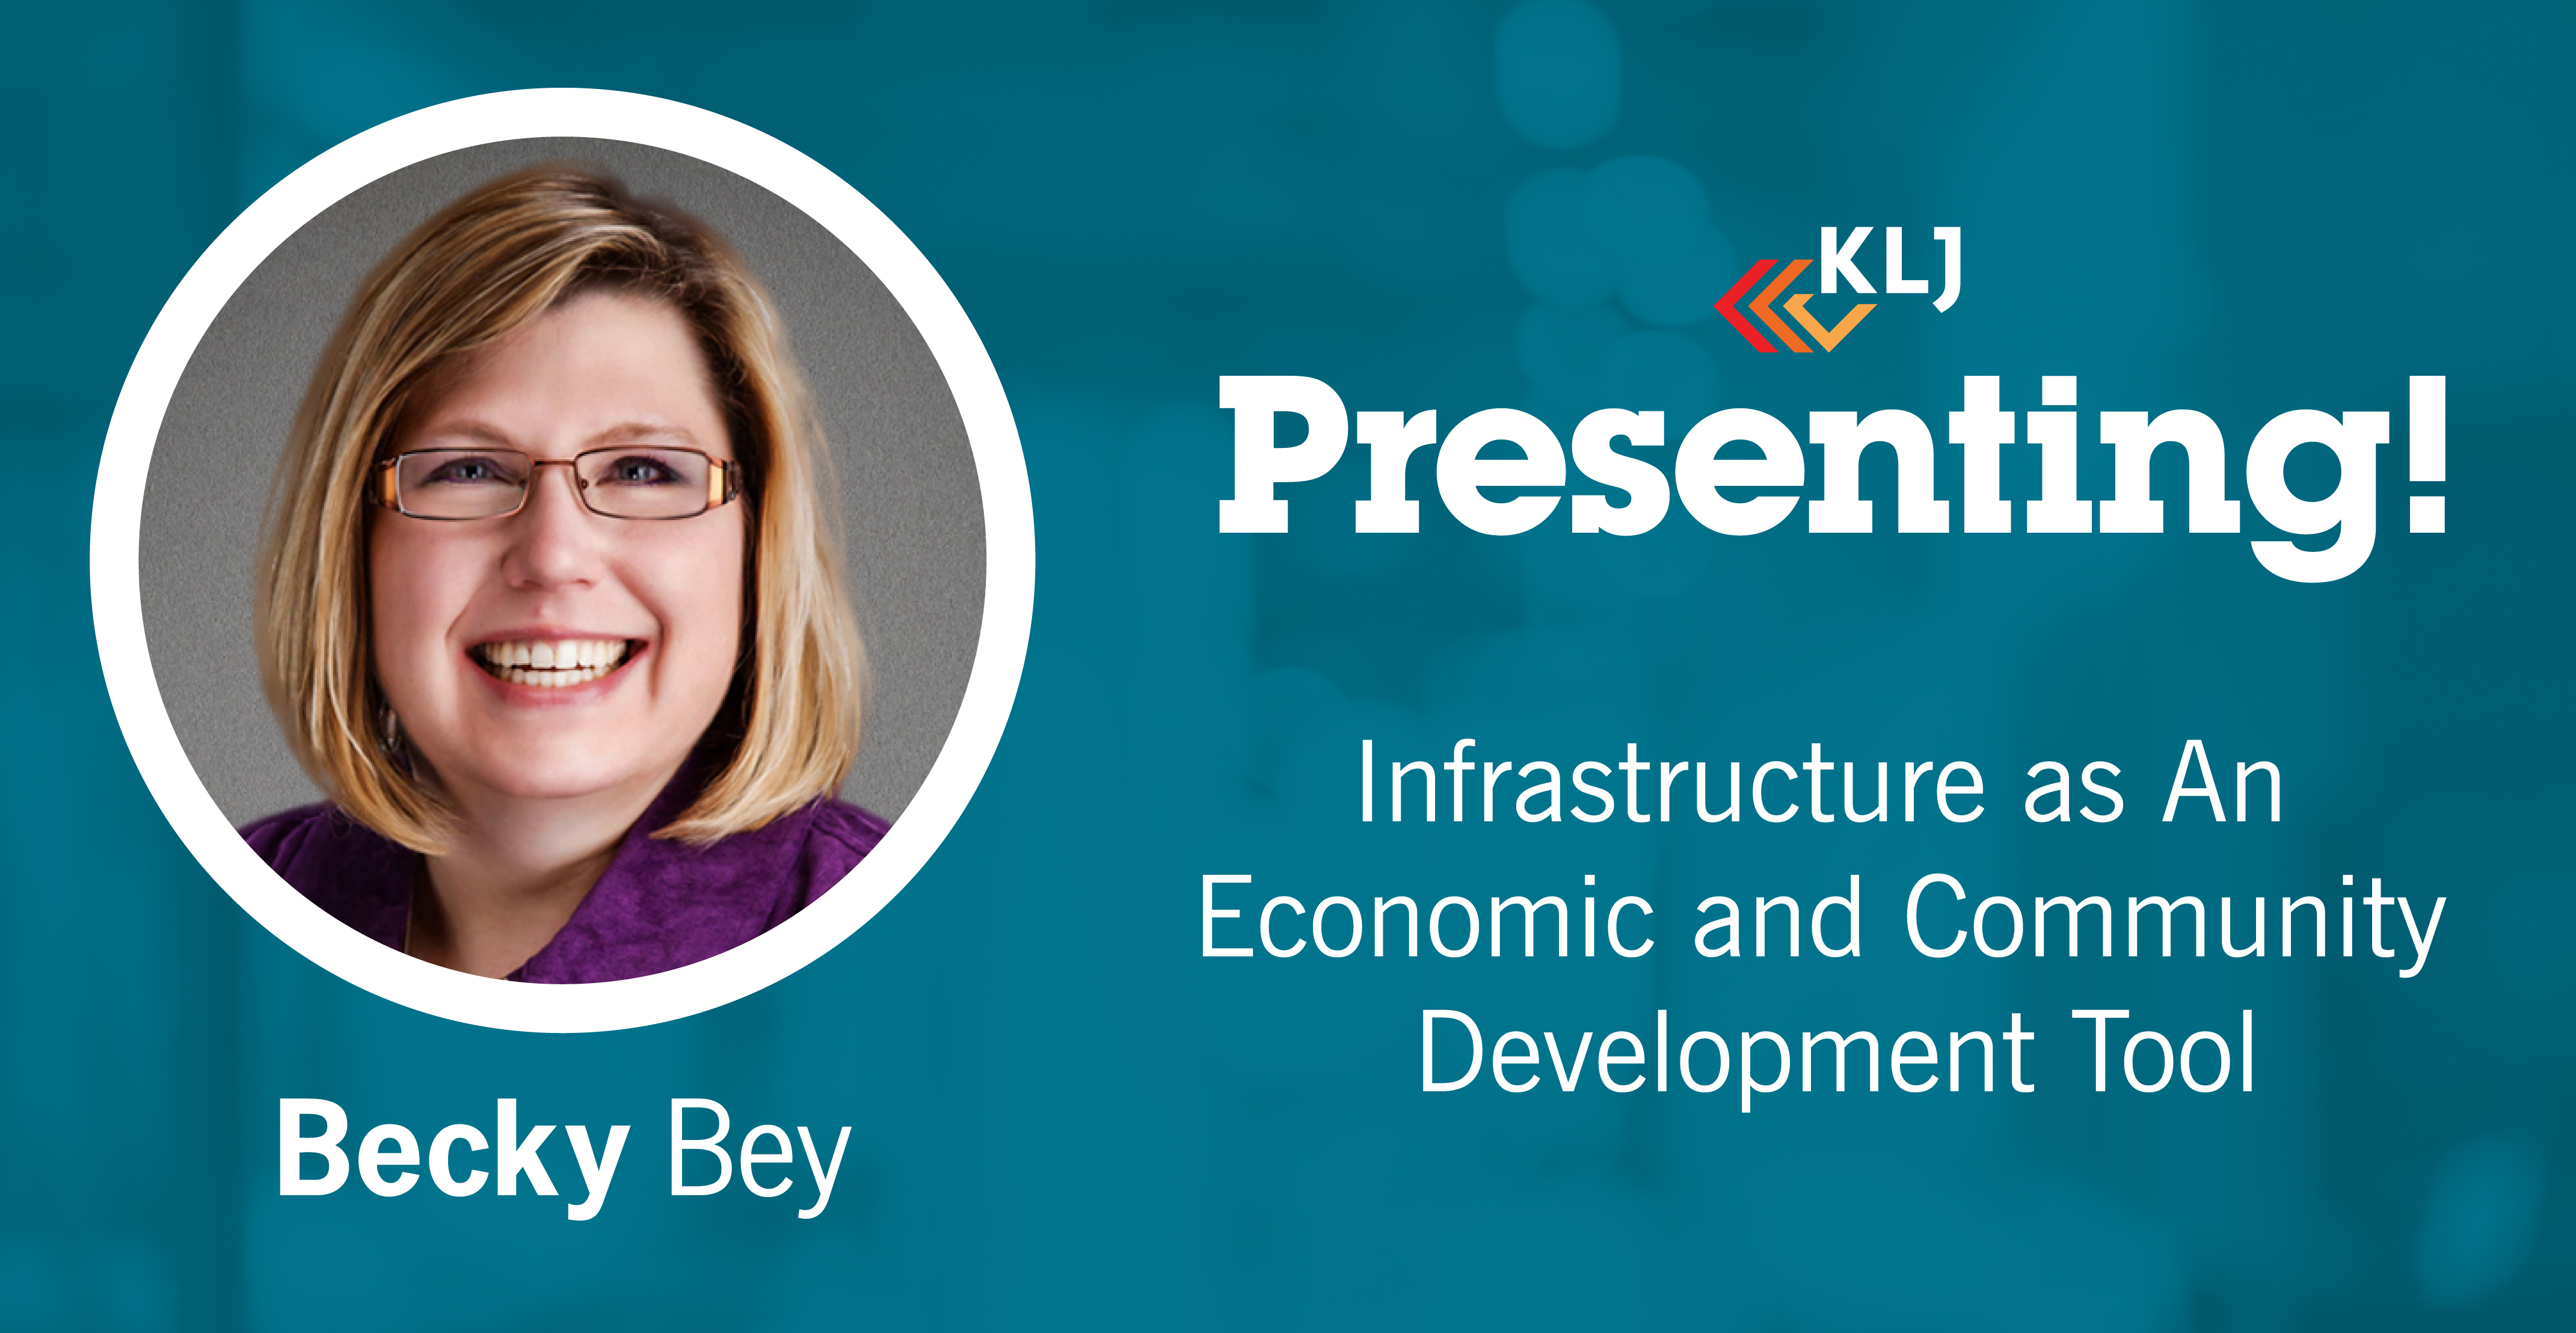 KLJ Presents How Infrastructure Drives Economic Development